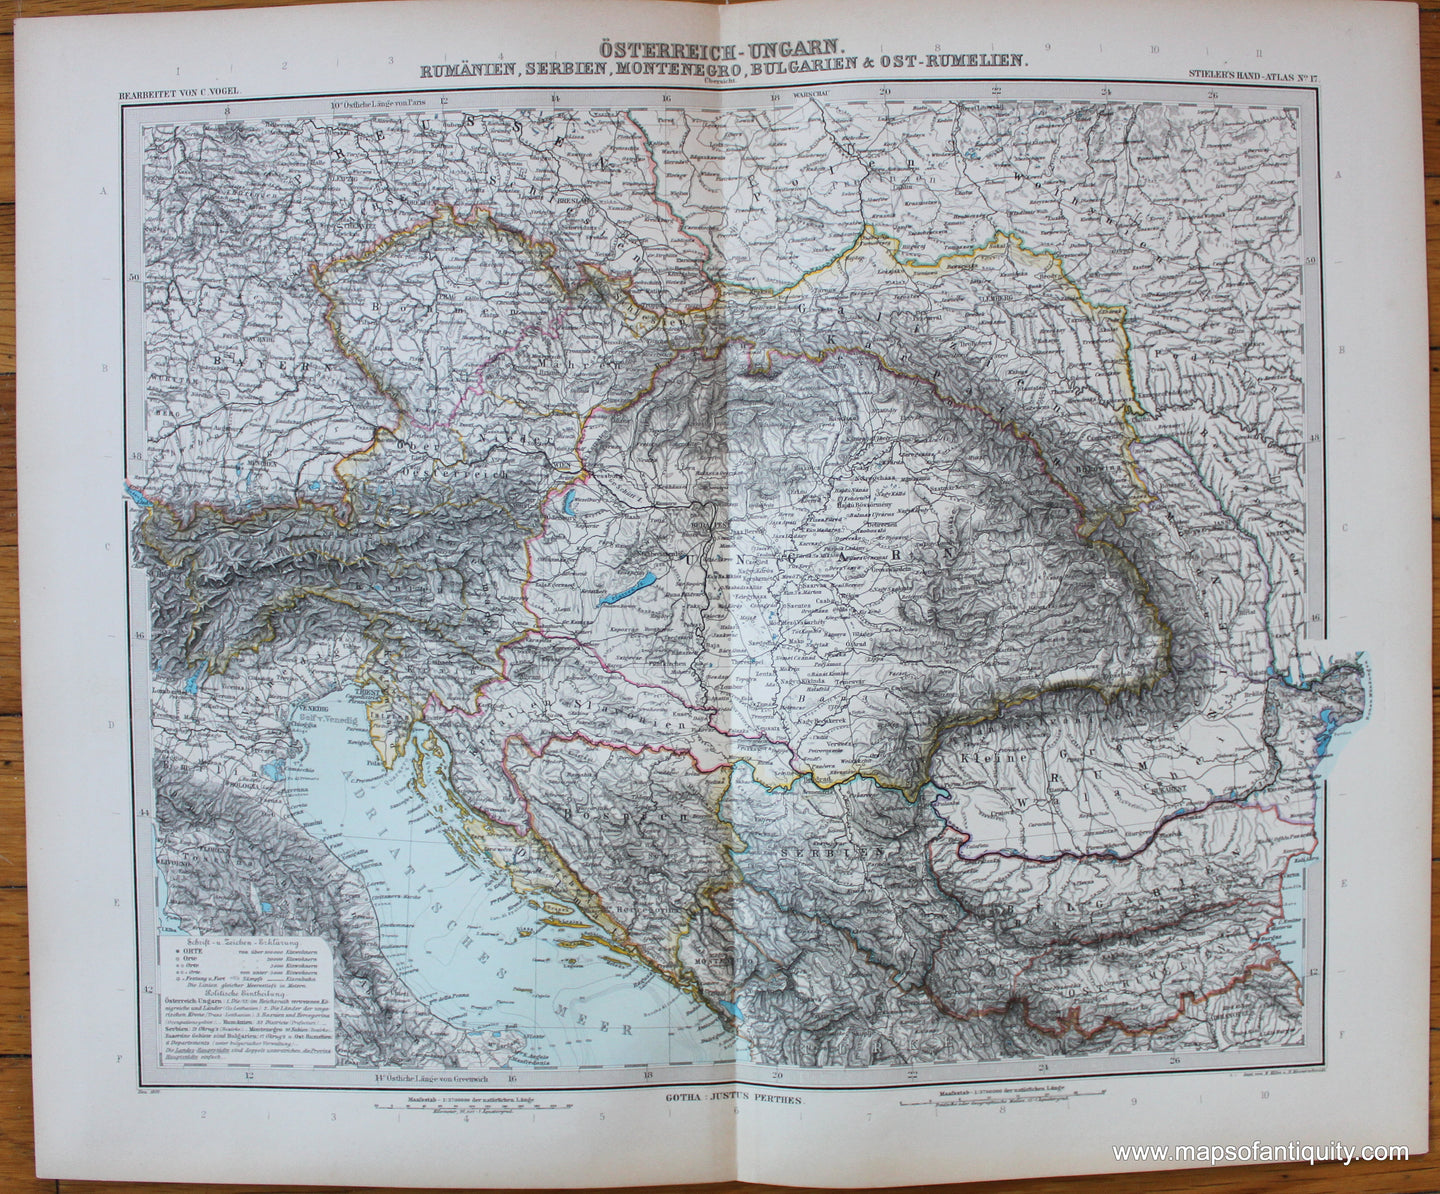 Antique-Map-Austria-Tirol-Hungary-Osterreichisch-Ungarische-Monarchie-Austro-Hungarian-Empire-Balkans-Czechia-Slovakia-Croatia-Romania-Stieler-1889-1880s-1800s-19th-century-Maps-of-Antiquity